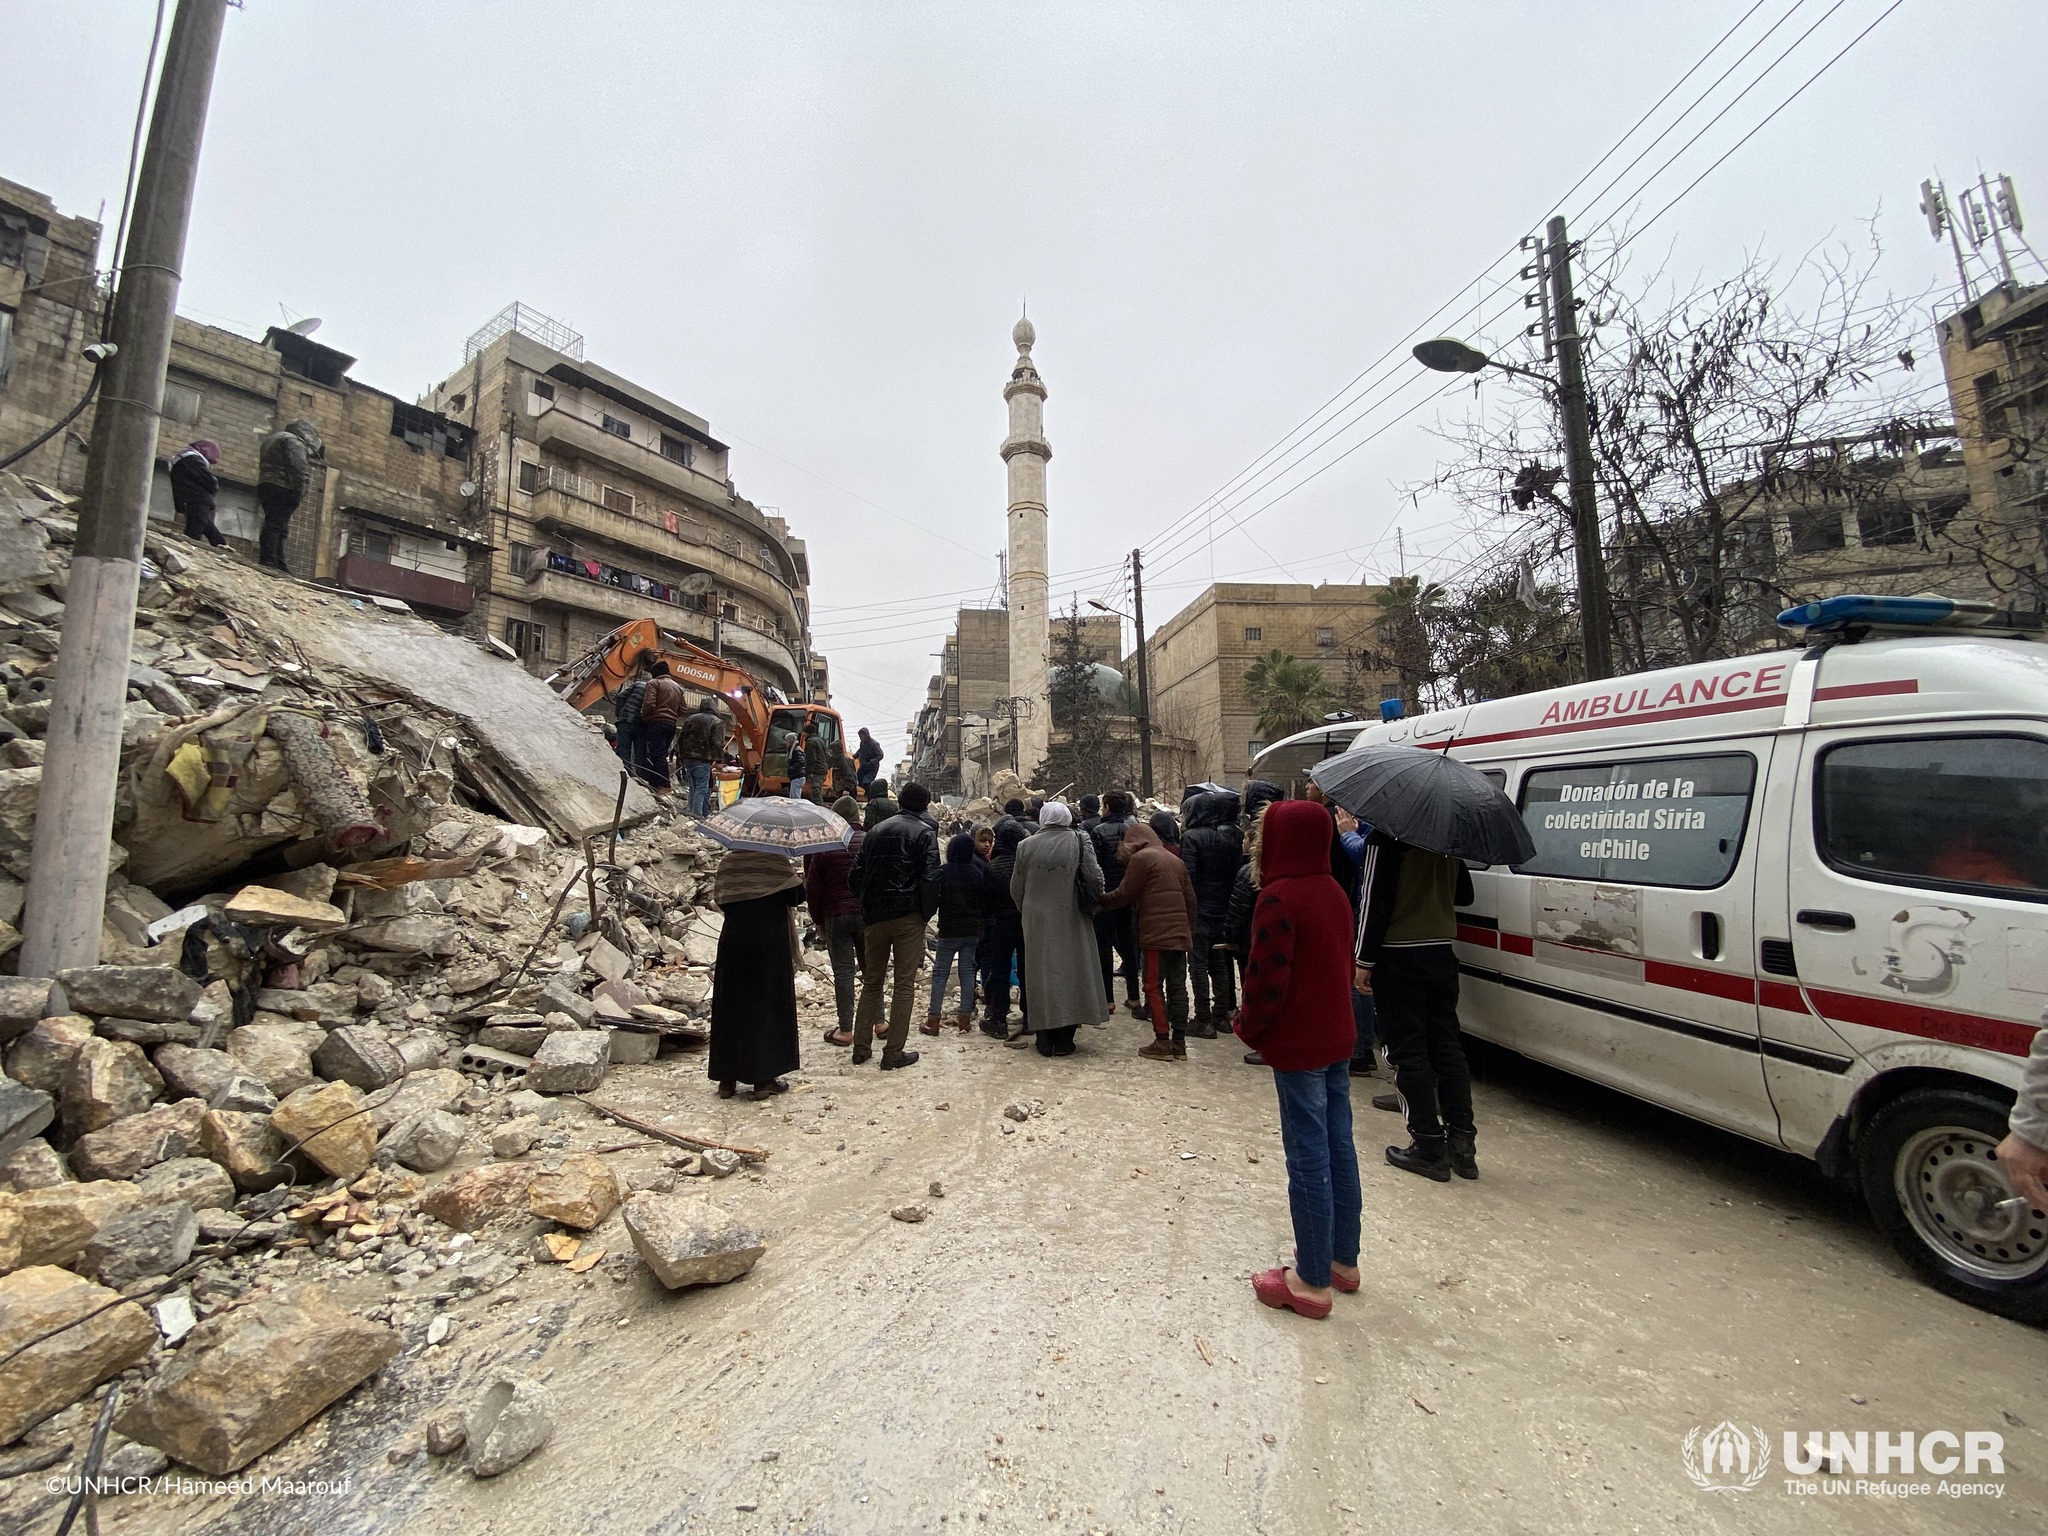 TÜRKIYE-SYRIA EARTHQUAKE 